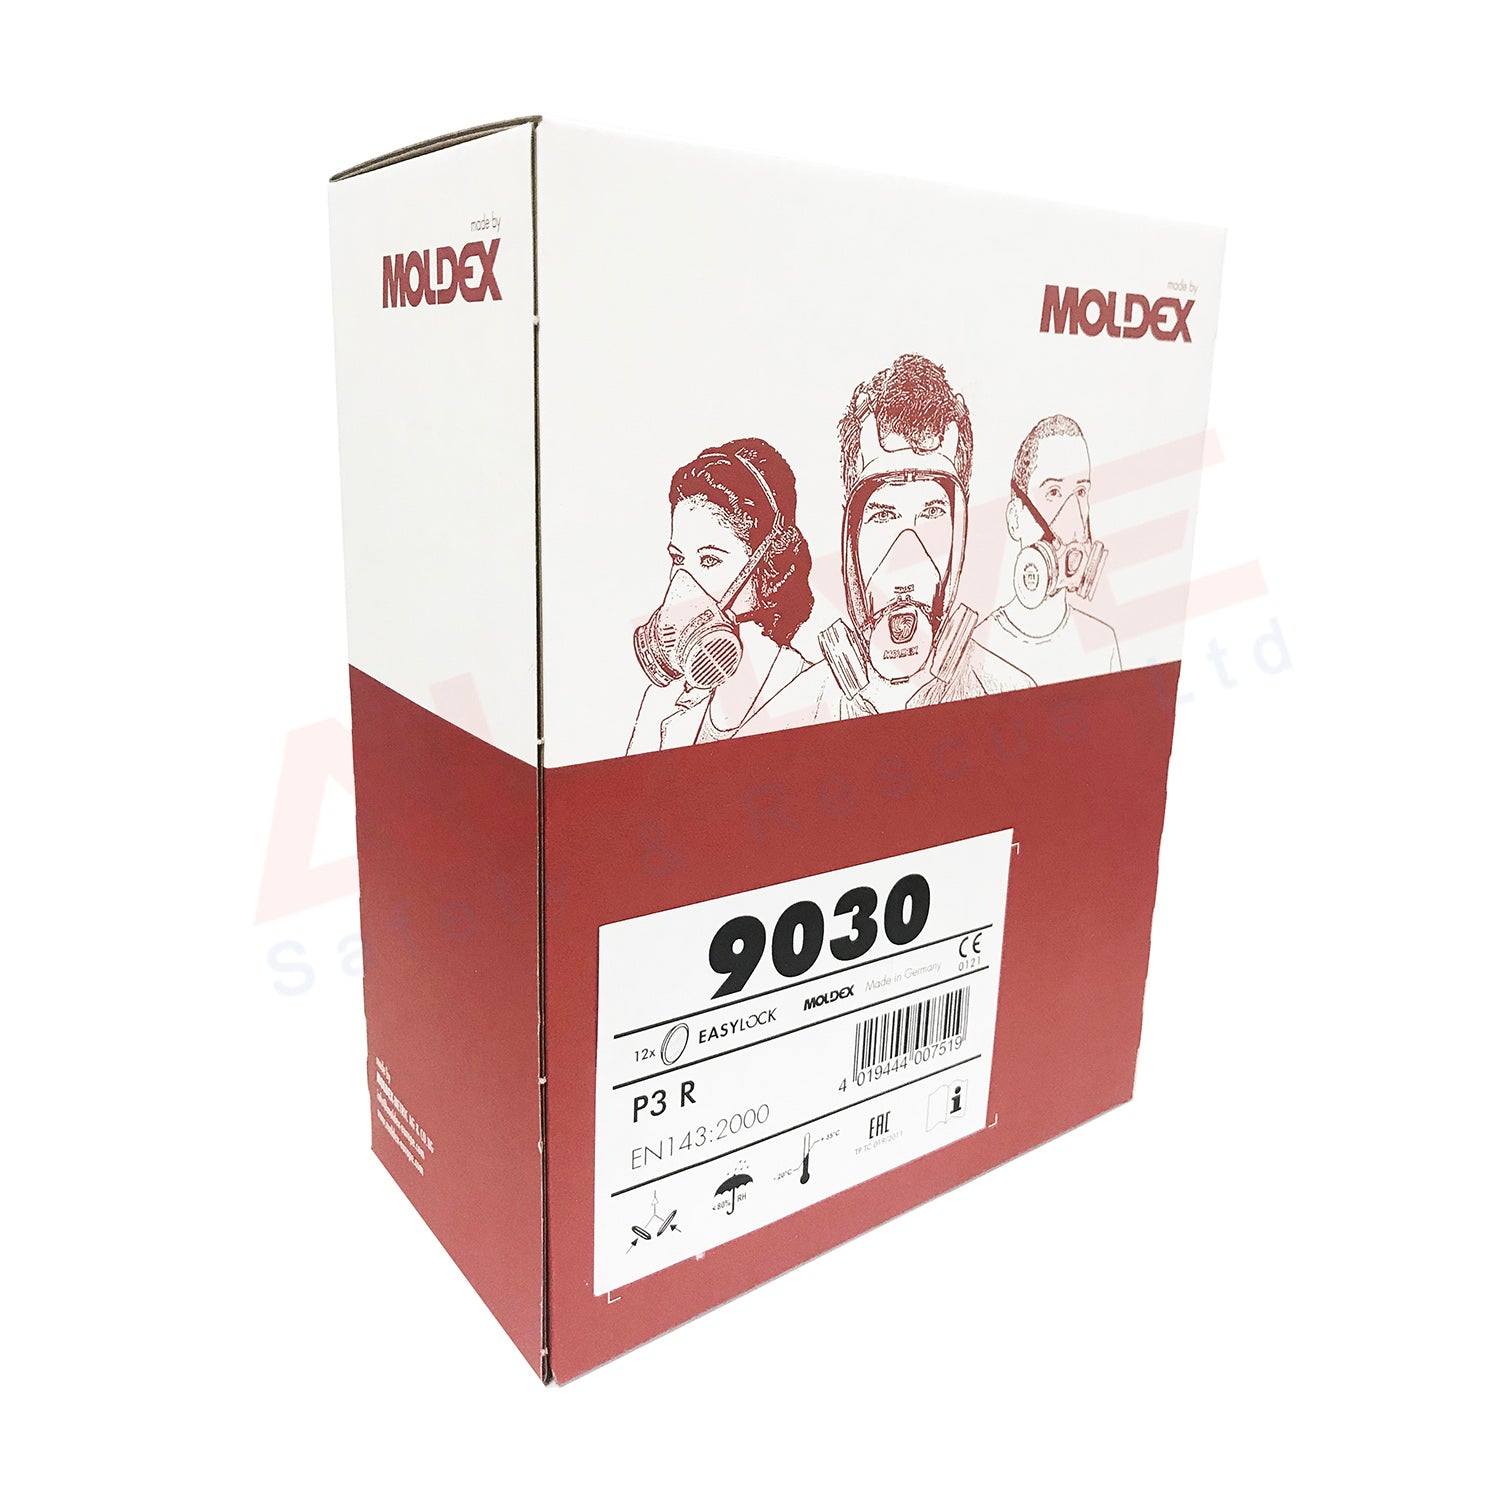 Moldex 9030 - P3 R Particulate Easylock Filter Box